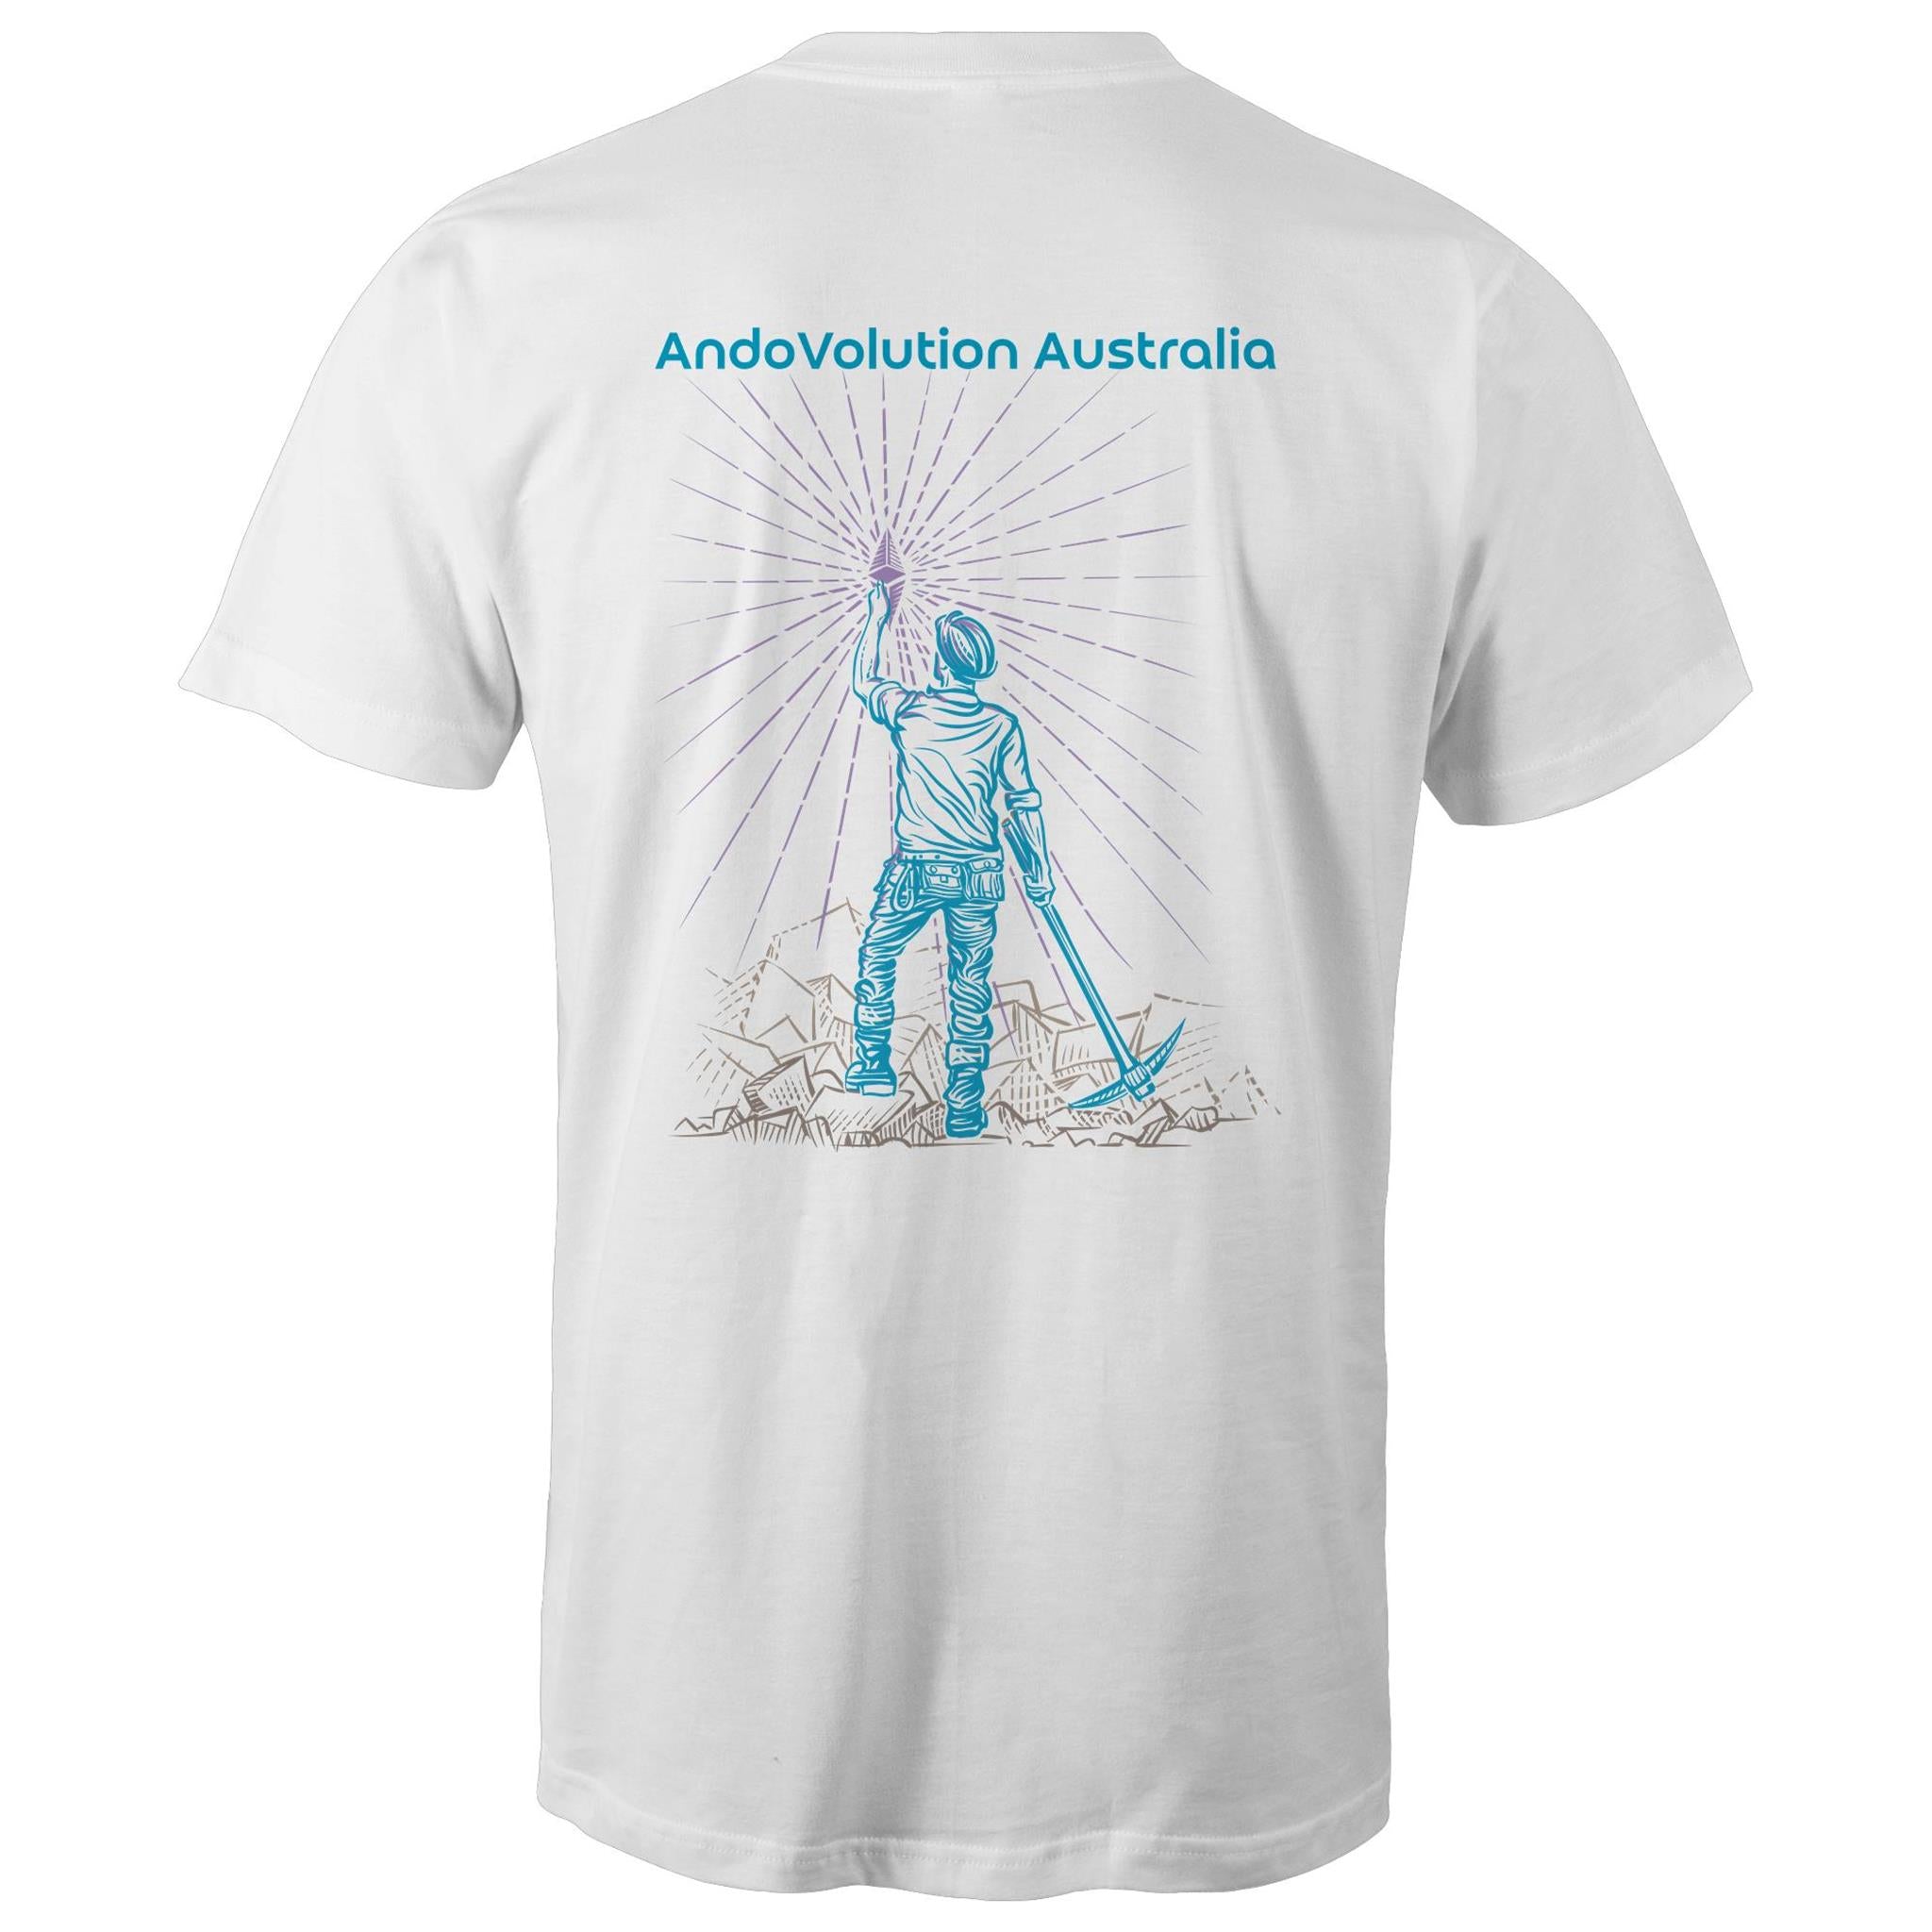 AndoVolution Australia T-Shirt - AndoVolution Australia